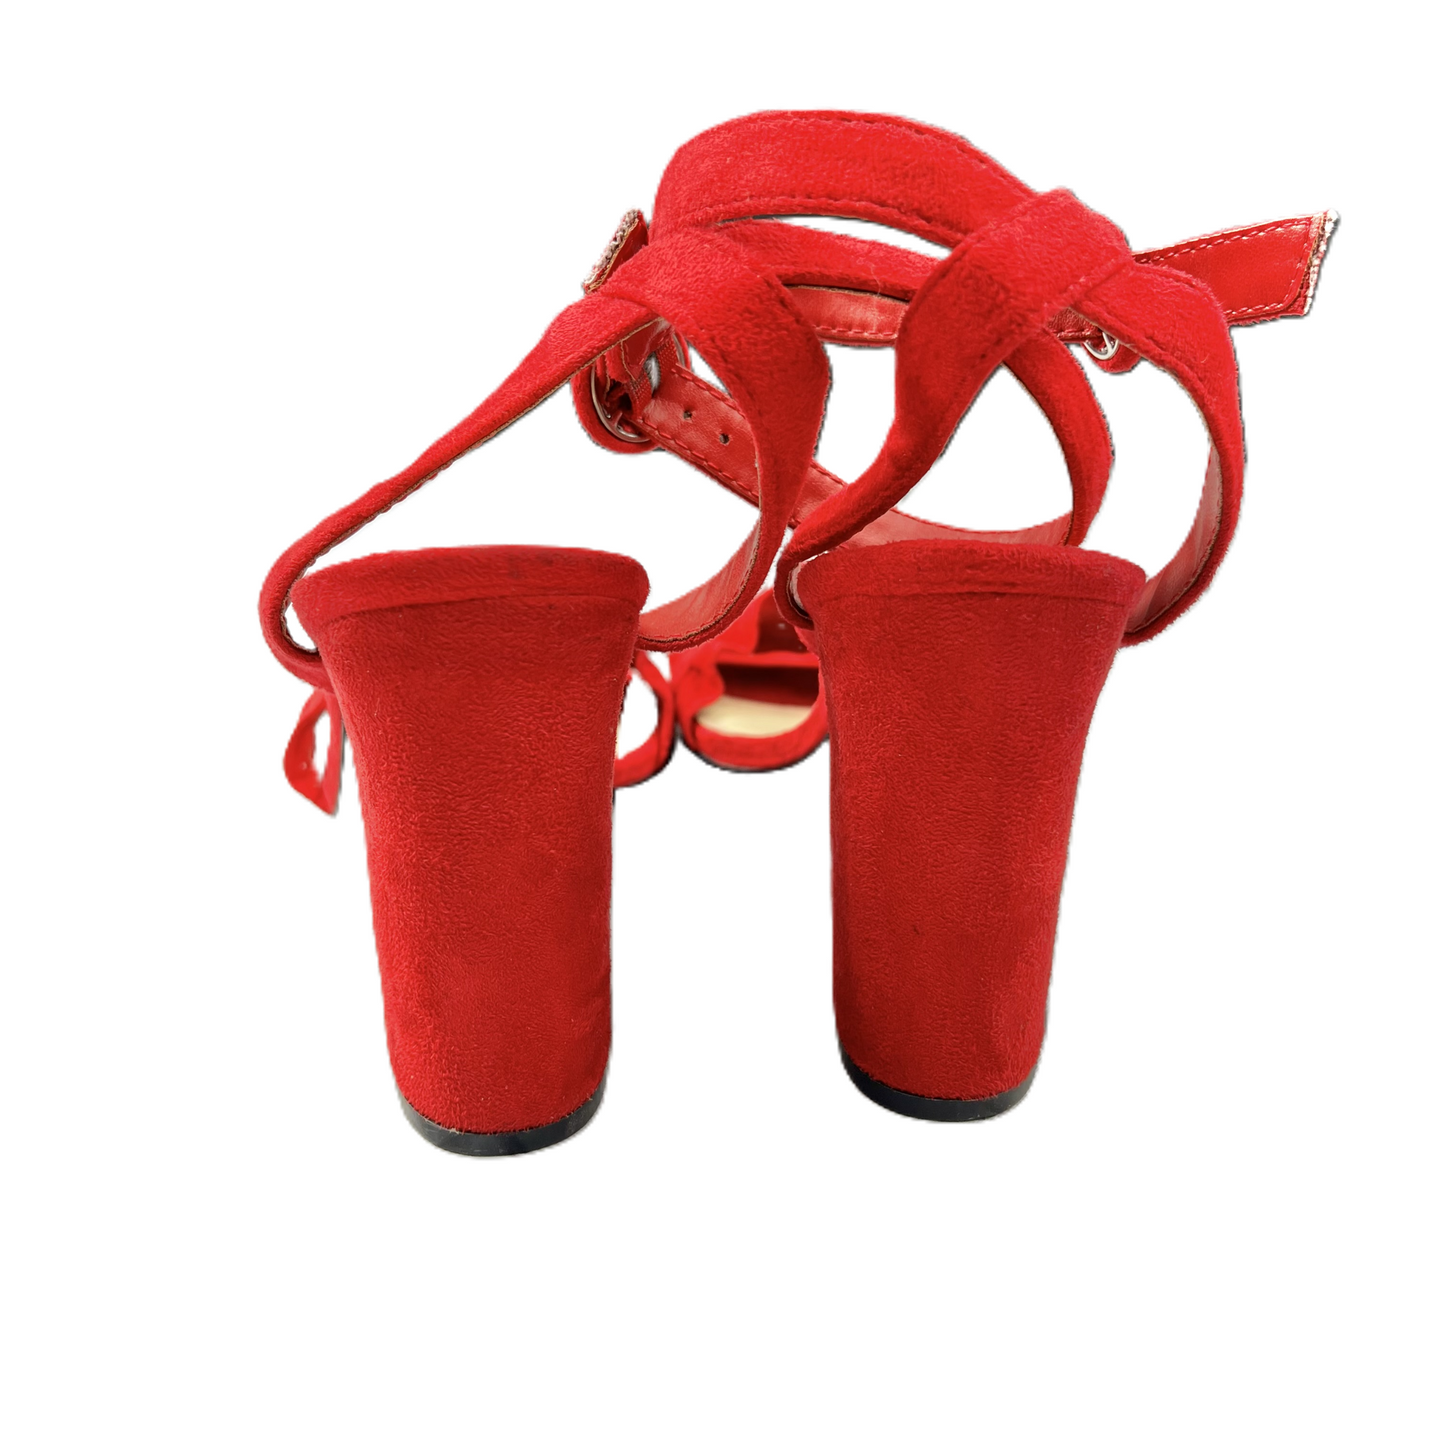 Red Sandals Heels Block By Indigo Rd, Size: 8